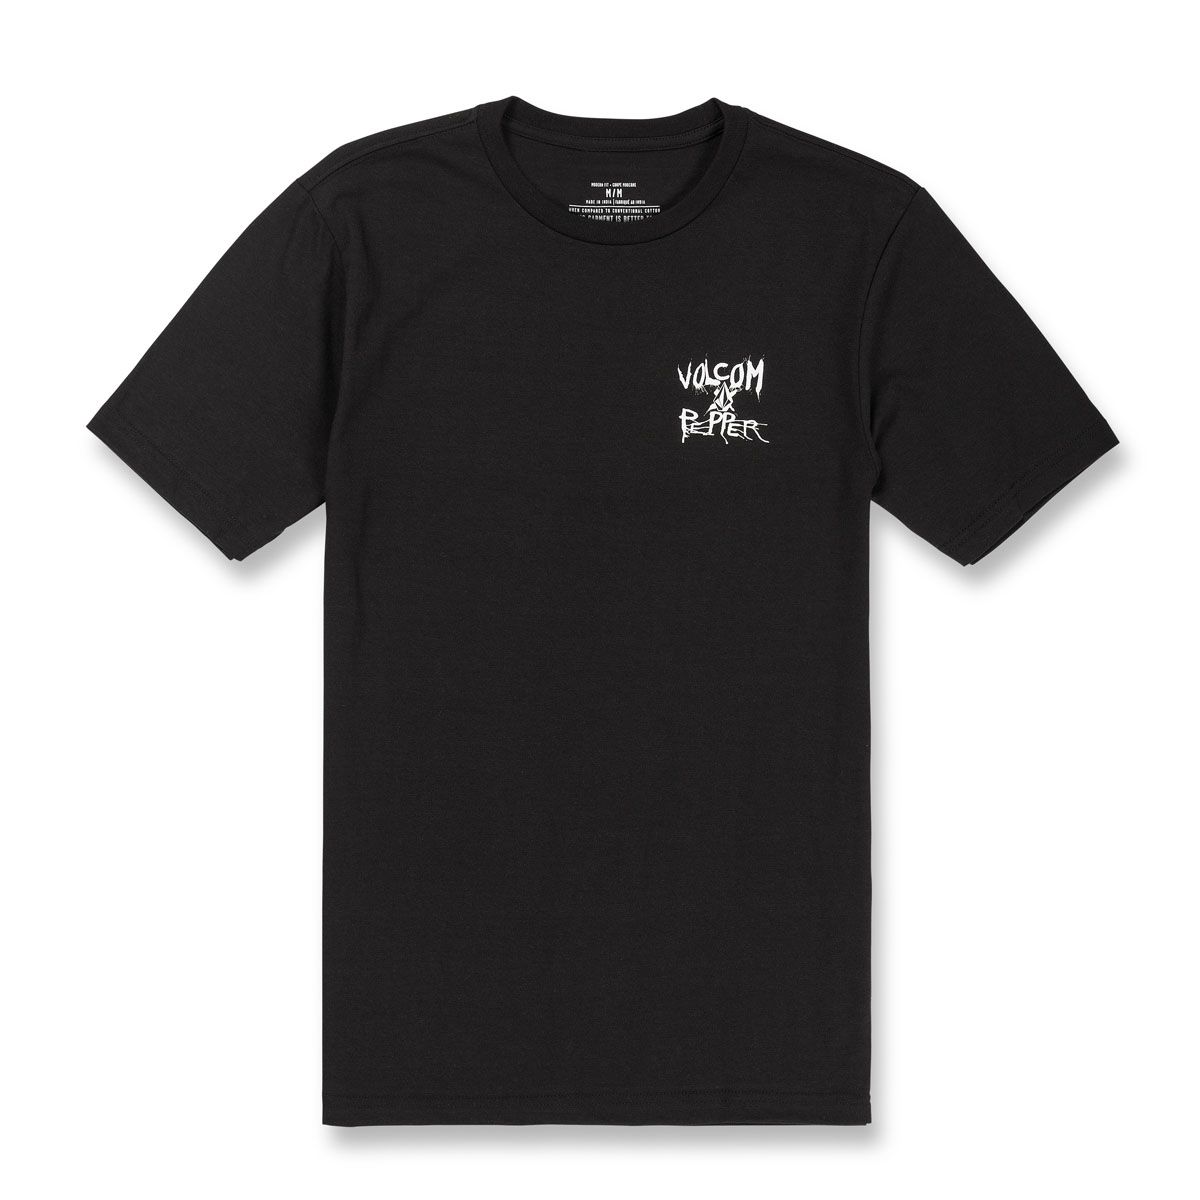 Camiseta Volcom V Entertainment X Pepper SS Tee Black | surfdevils.com